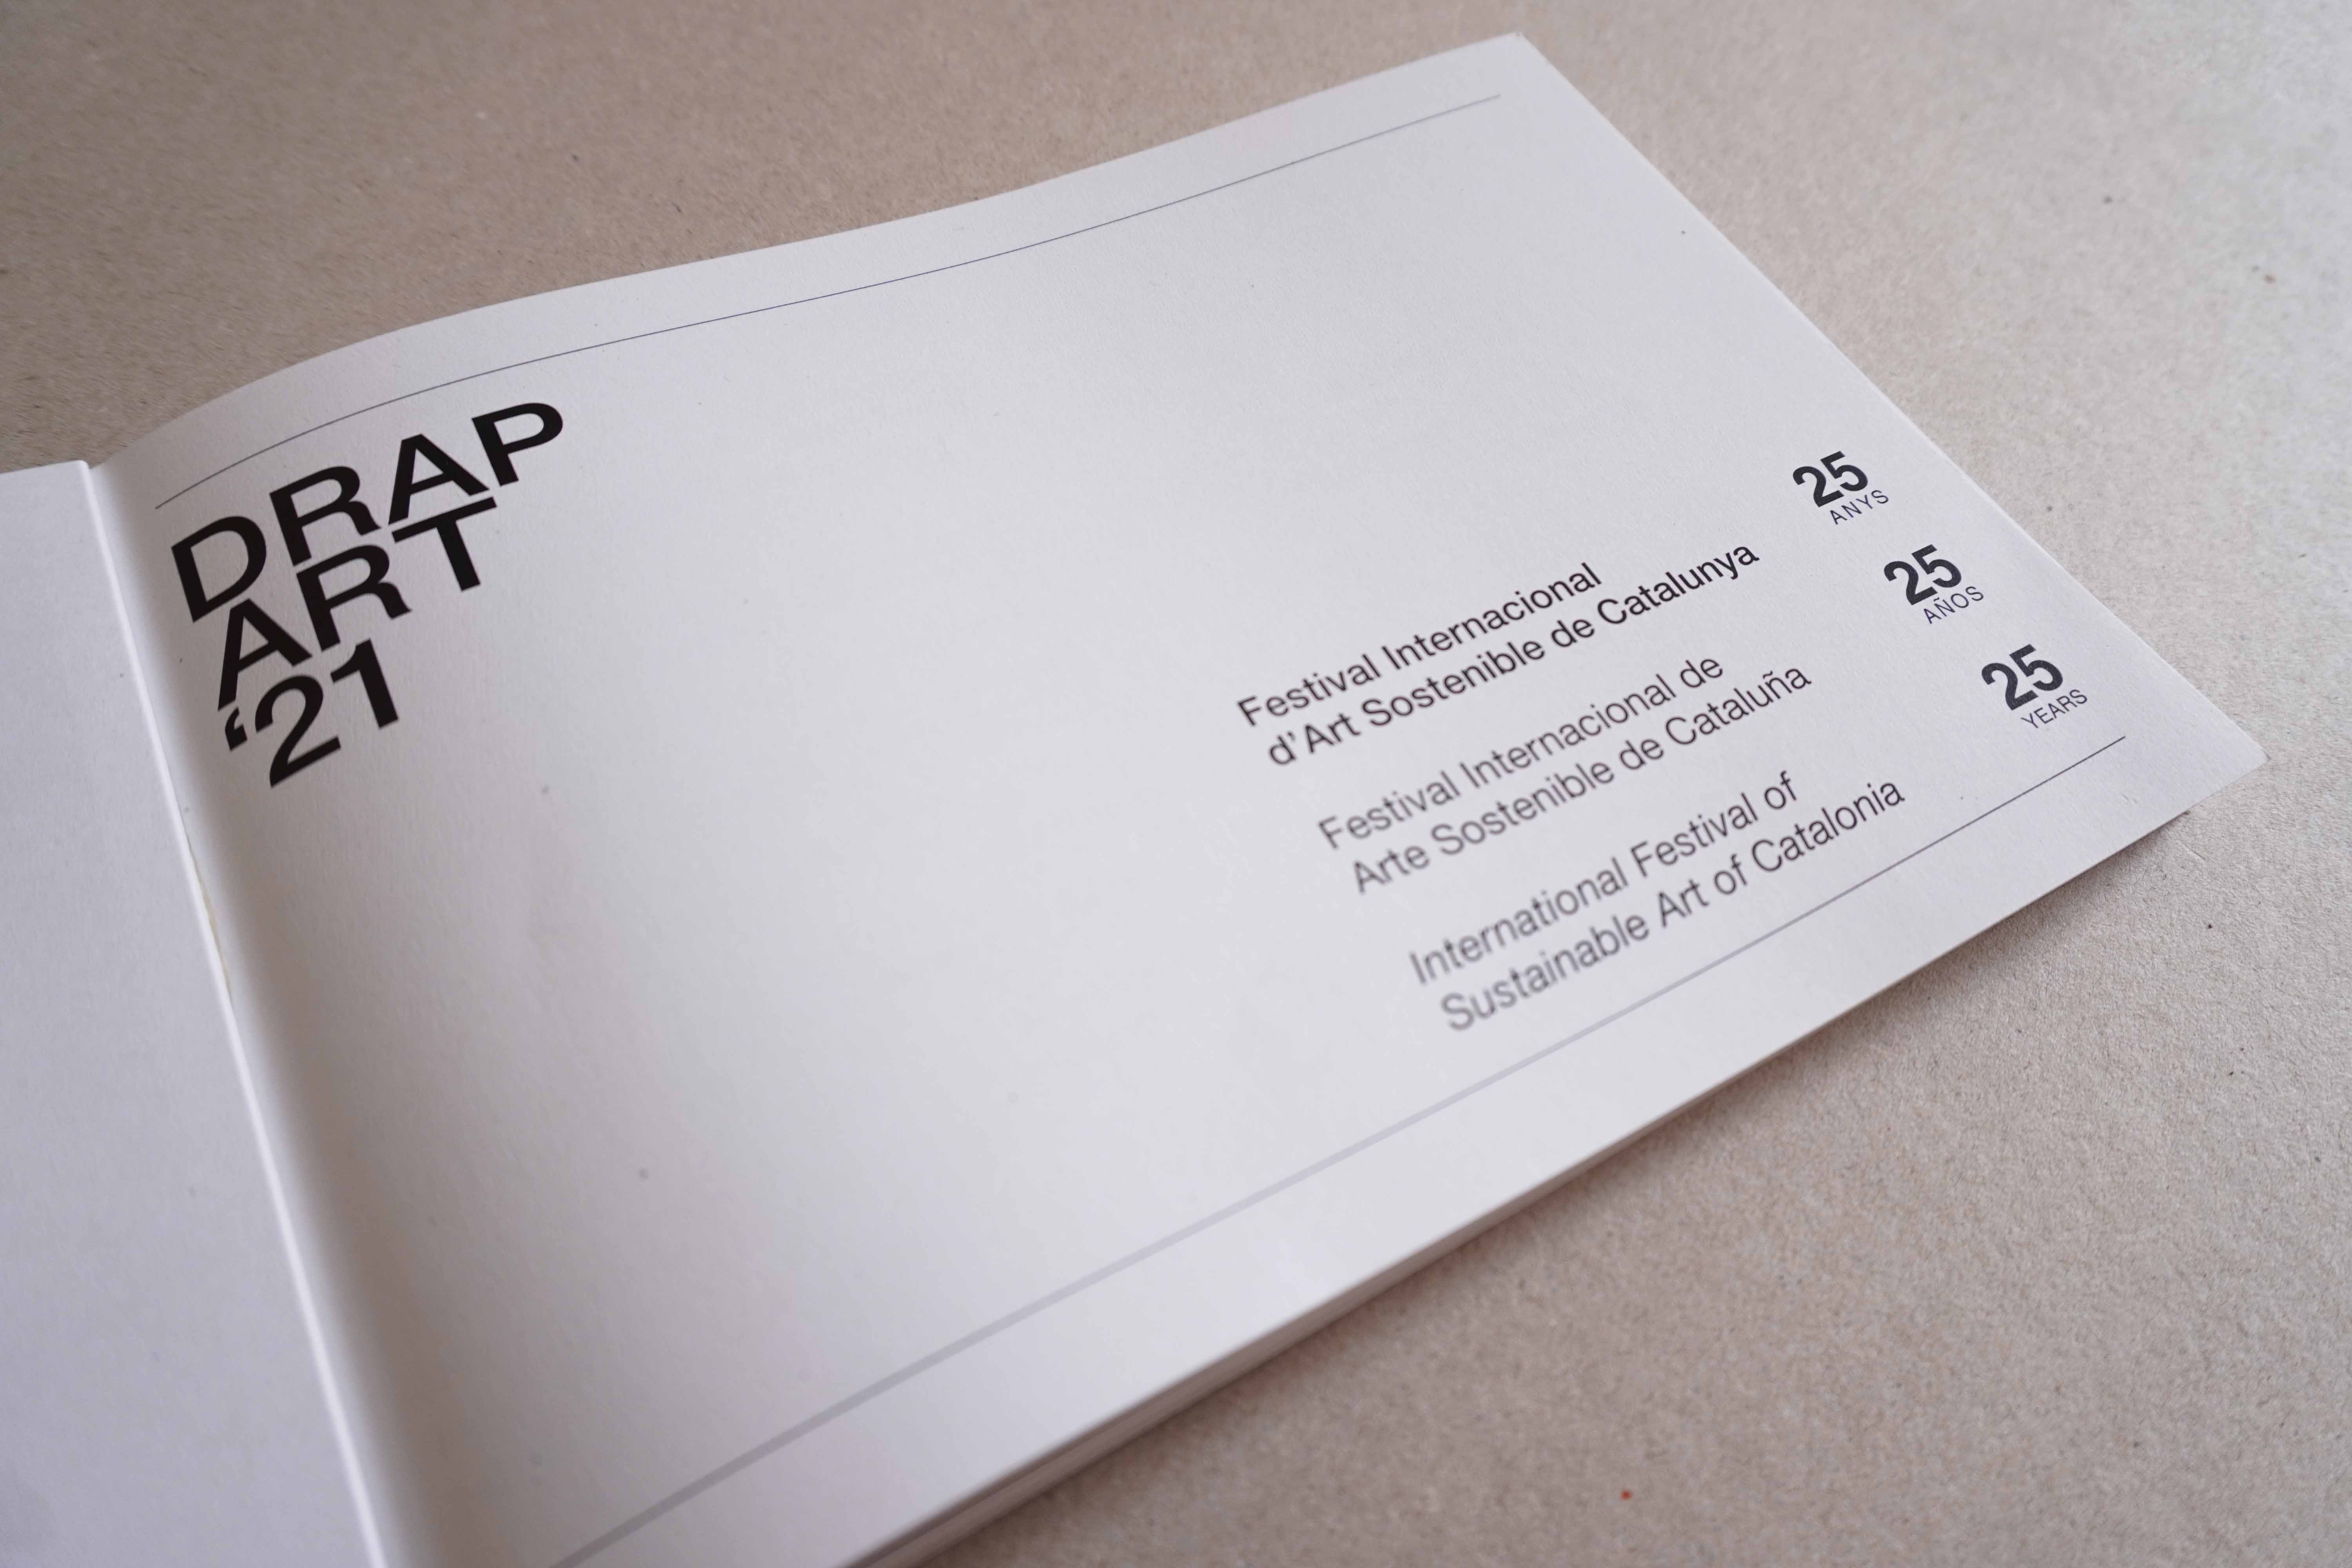 Drap-Art'21 – Catalog – 25th Edition of Drap-Art